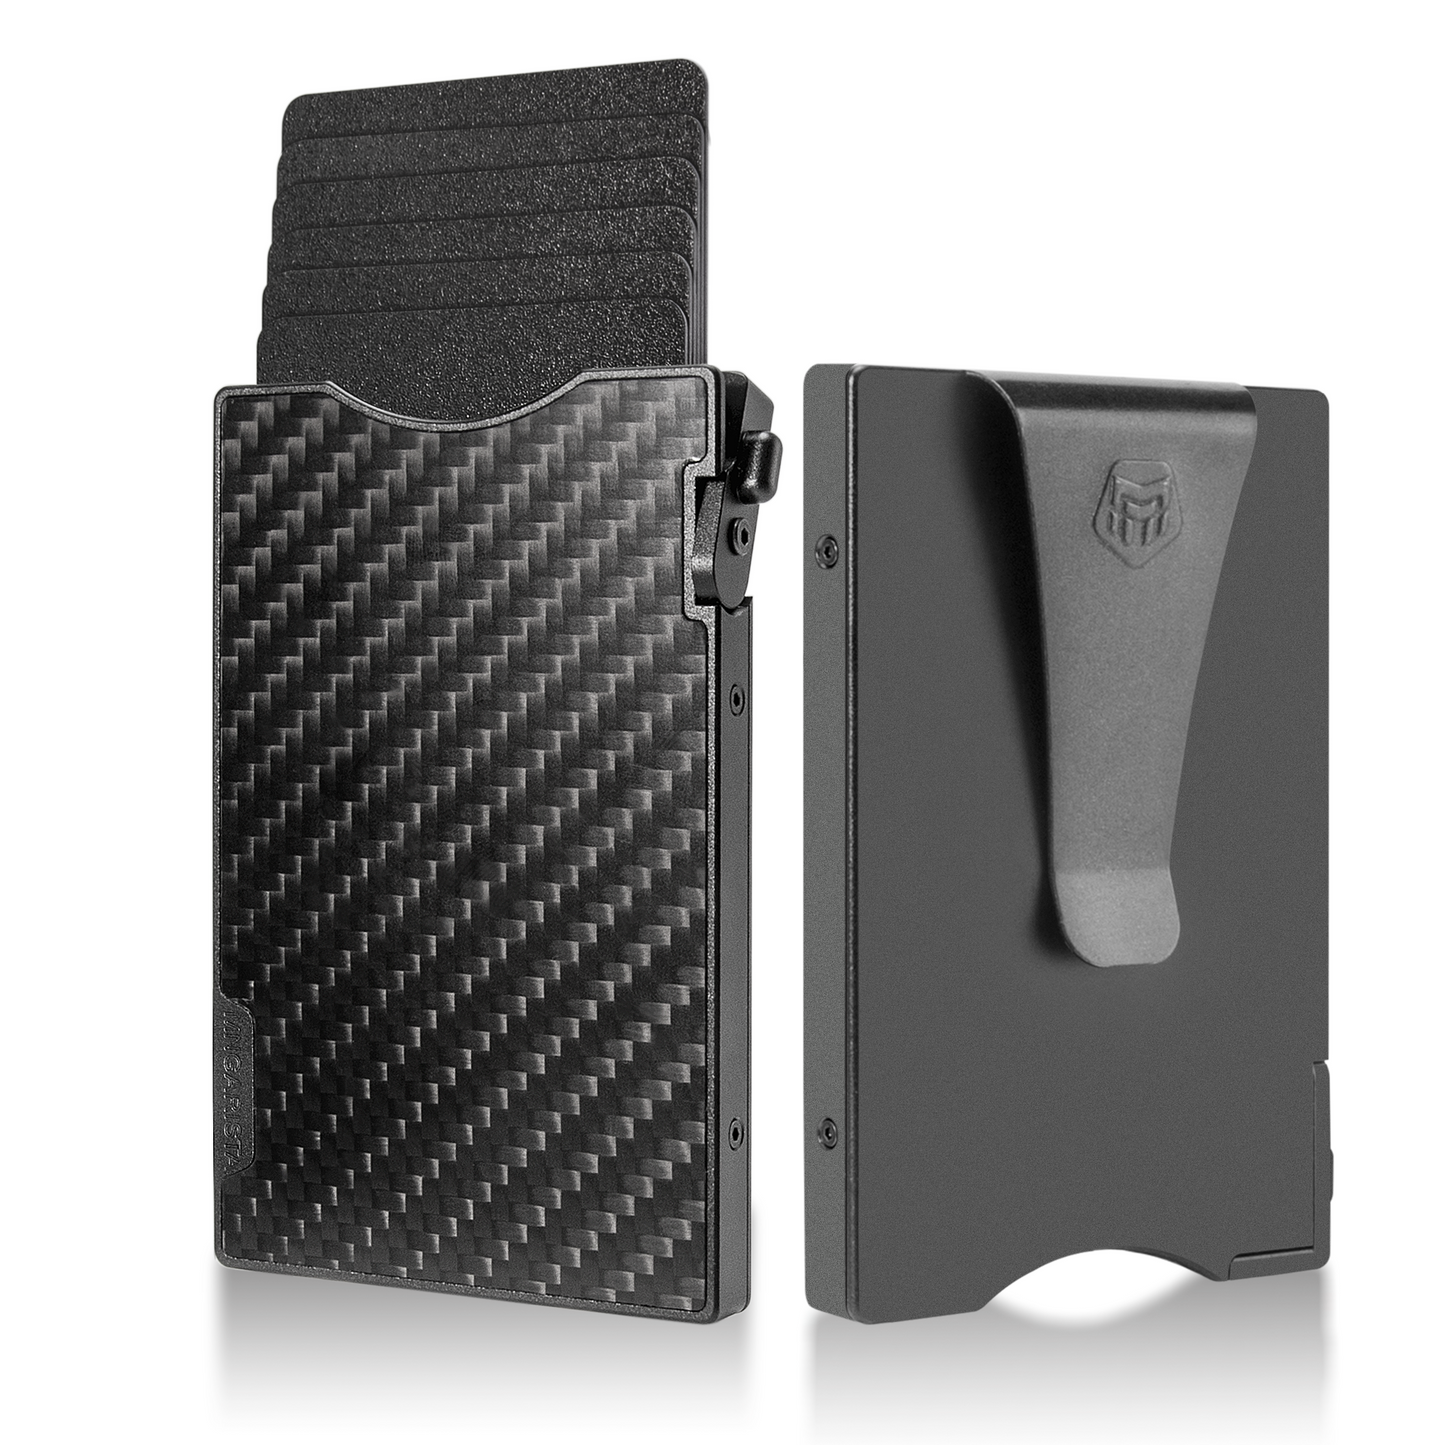 Mngarista pop-up metal card holder wallet, black secrid metallic, Holding 6 cards